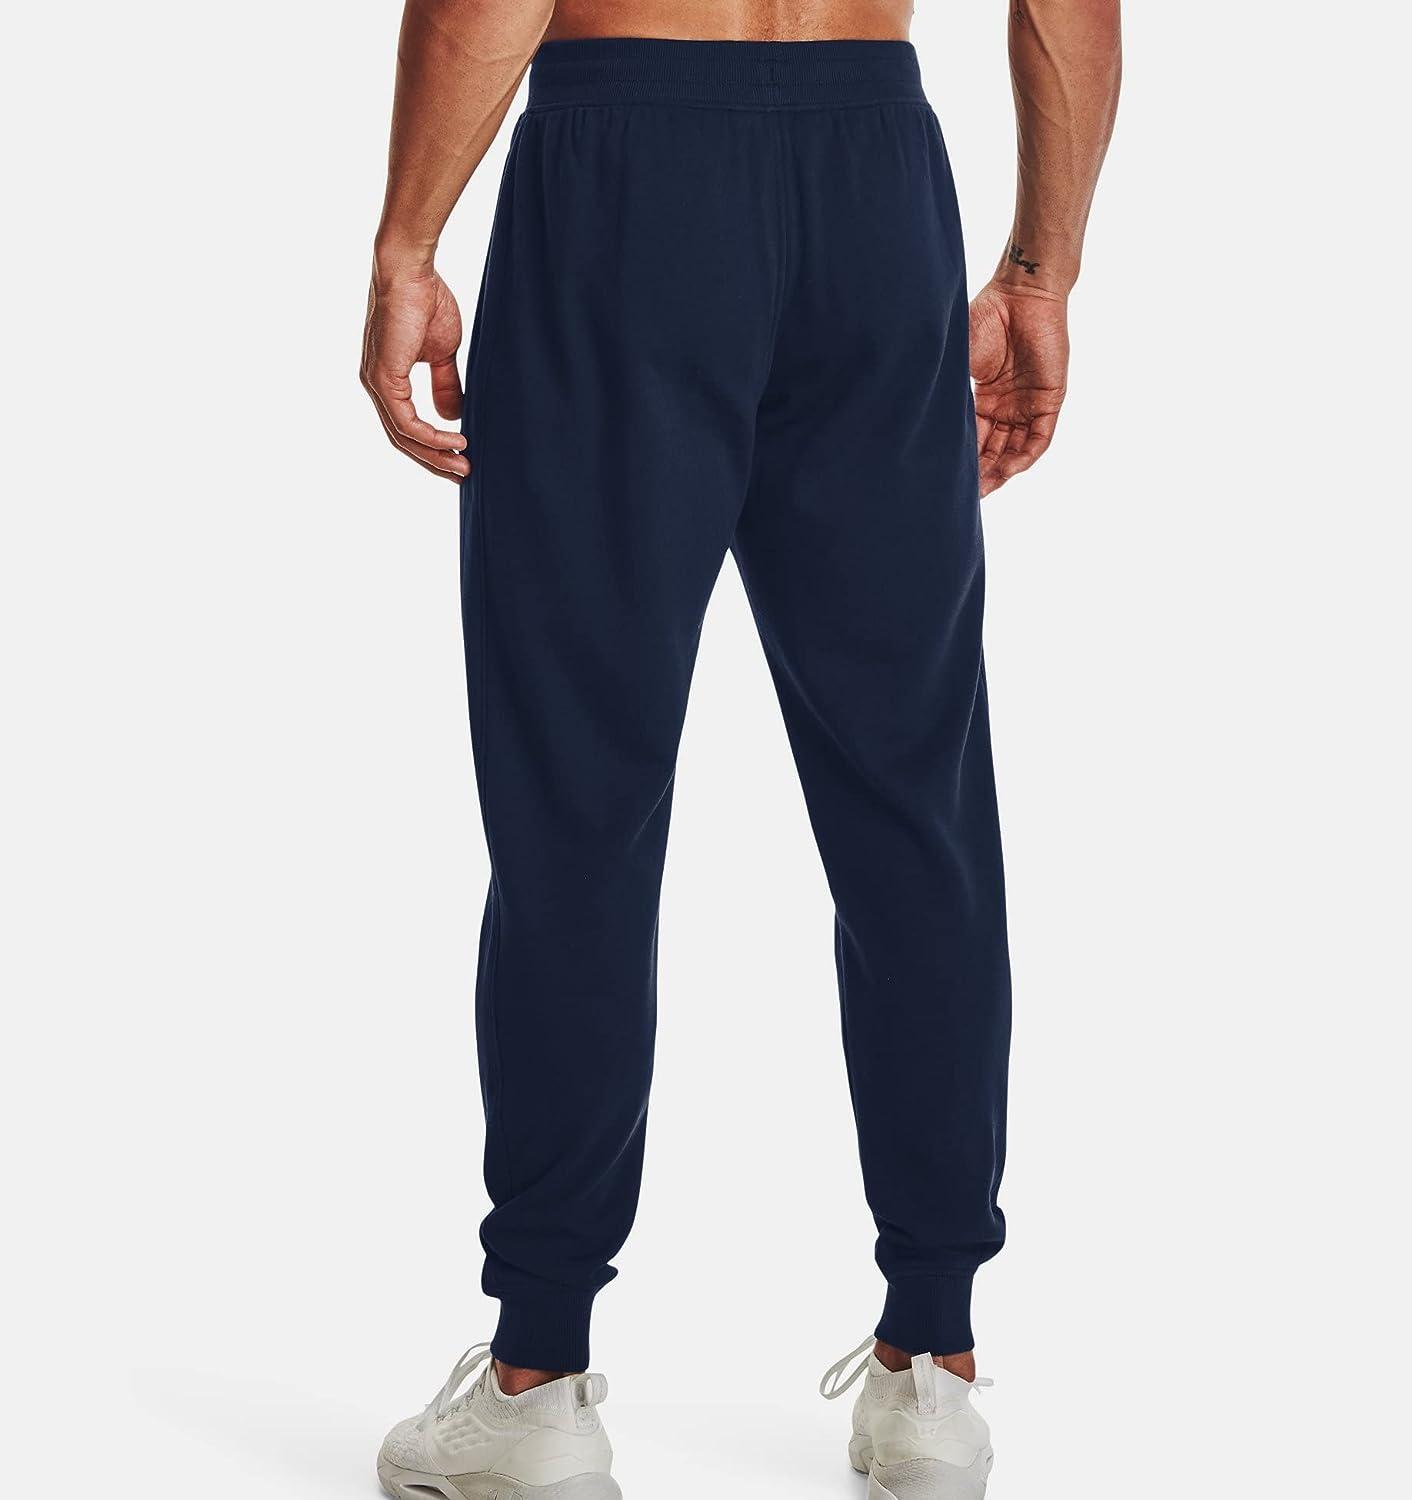 UNDERARMO Rival Workout Pants - Men's